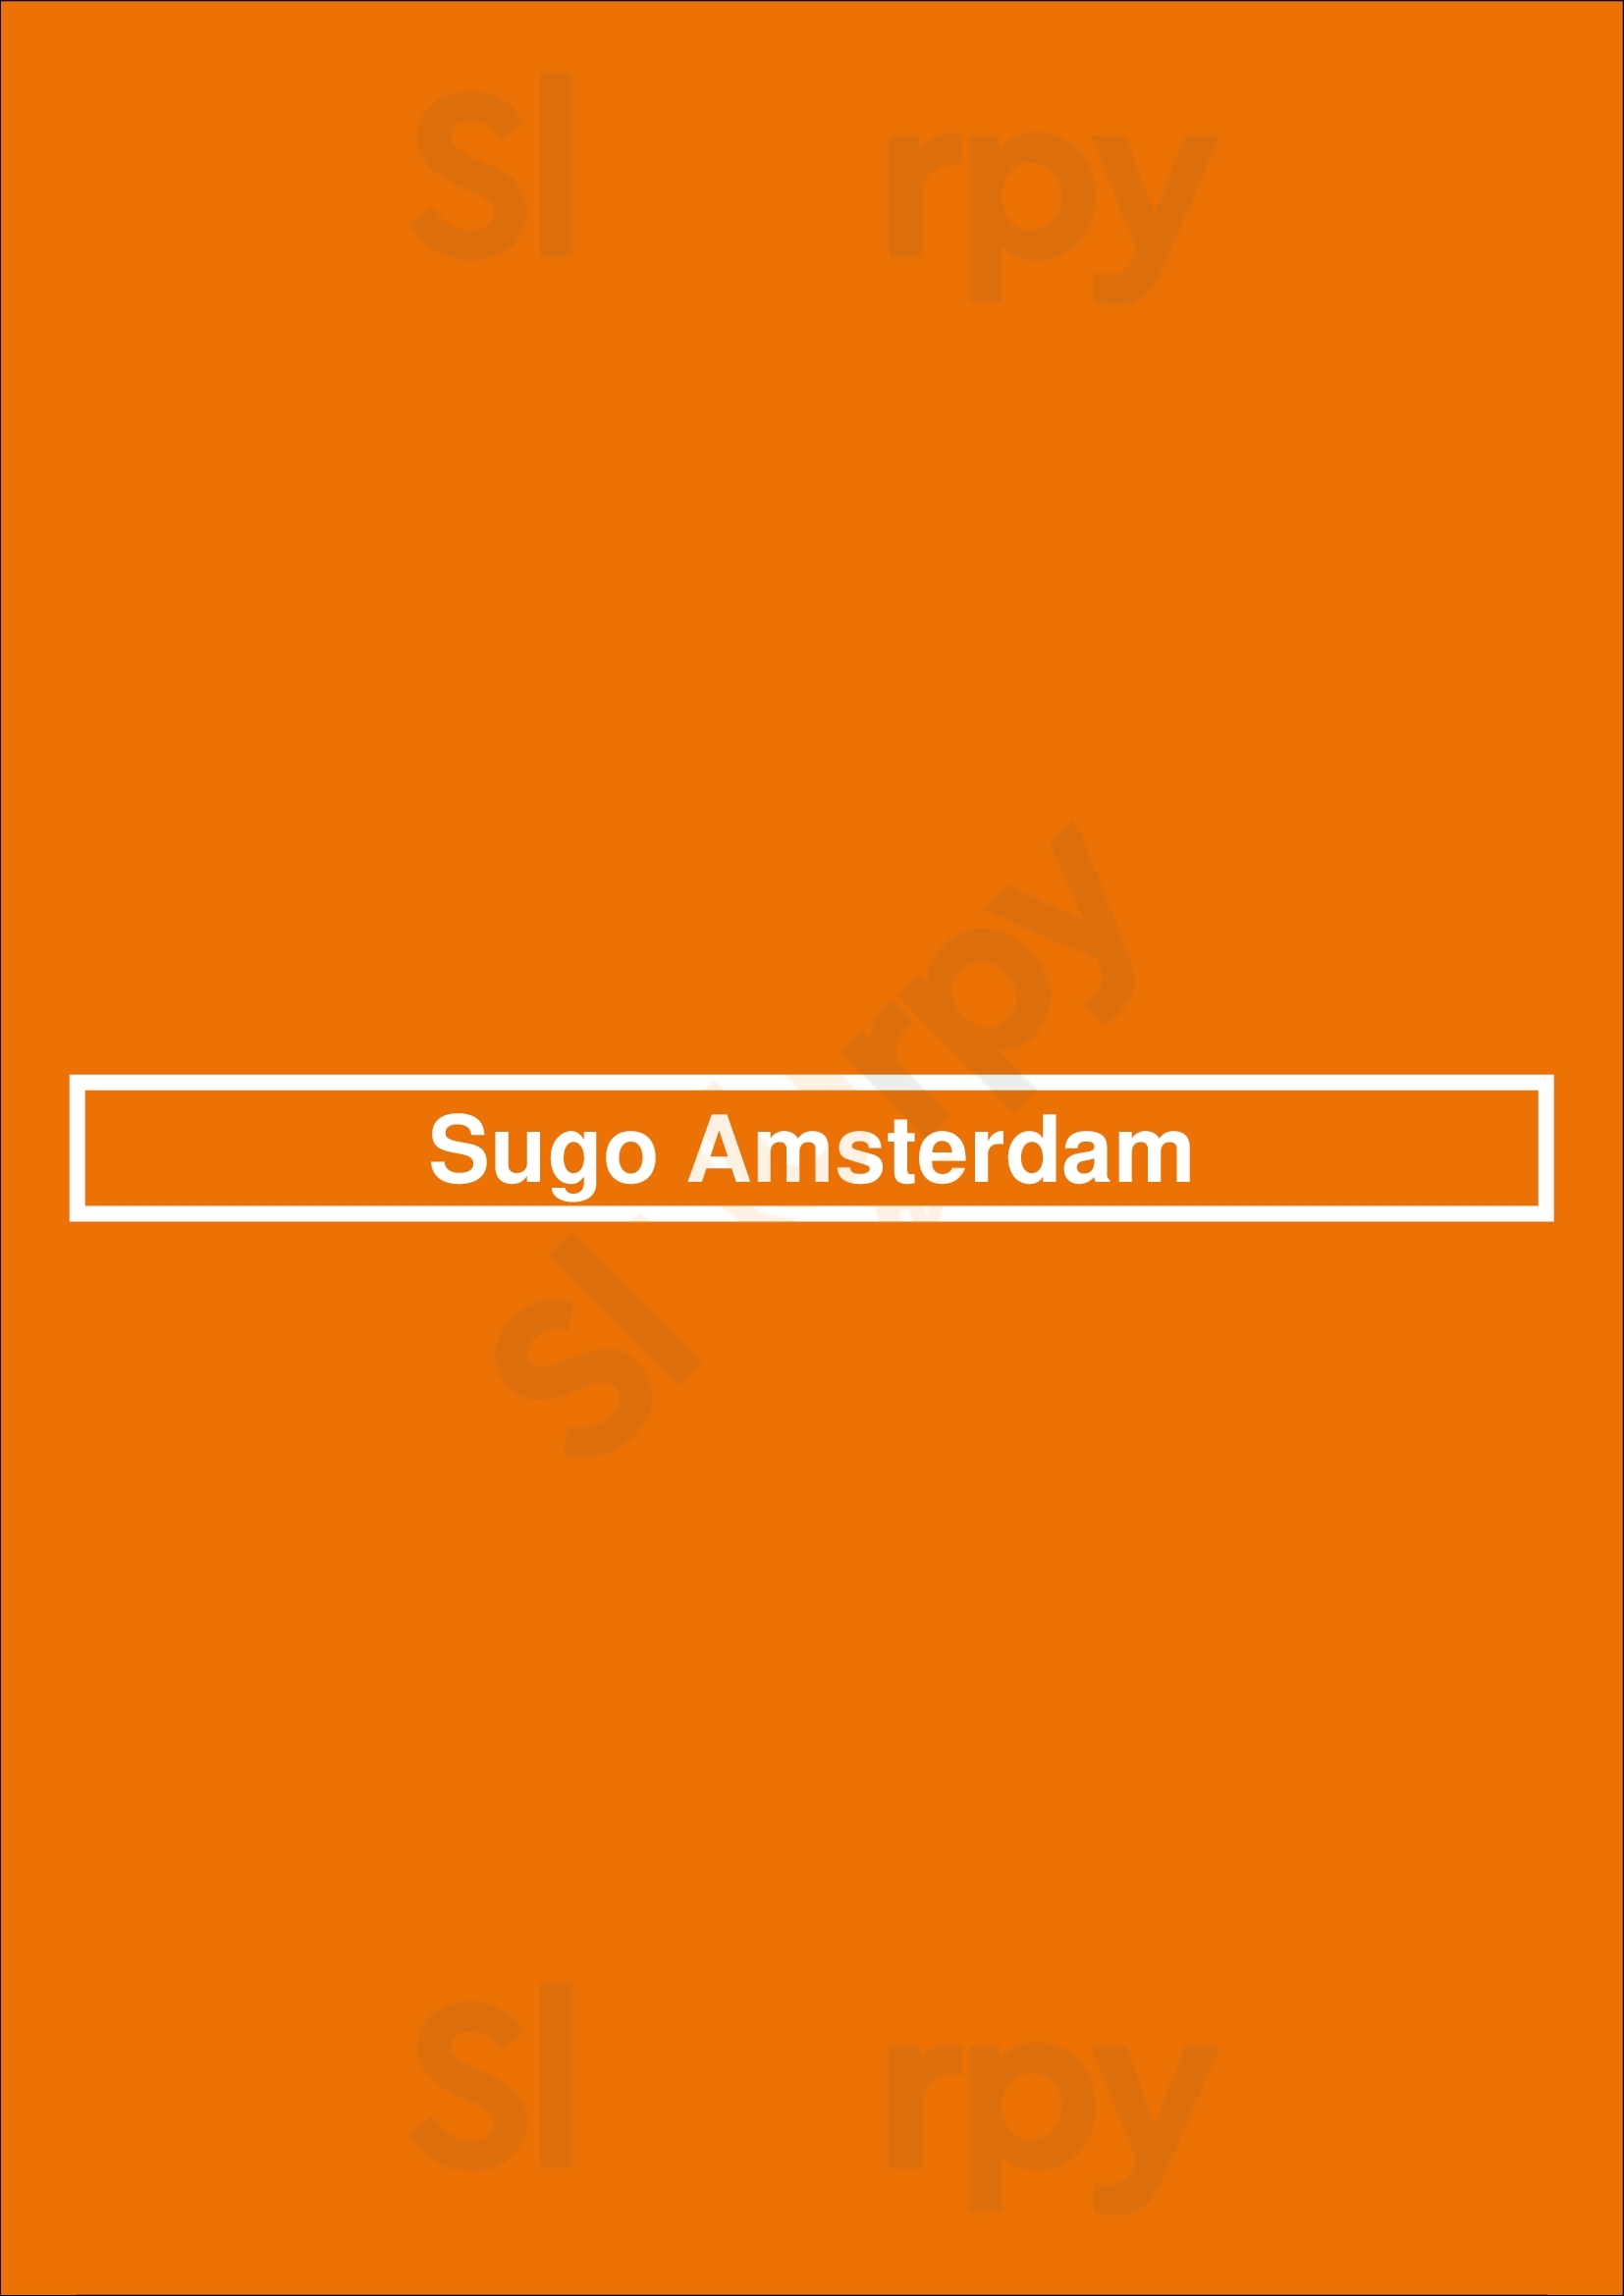 Sugo Amsterdam Amsterdam Menu - 1